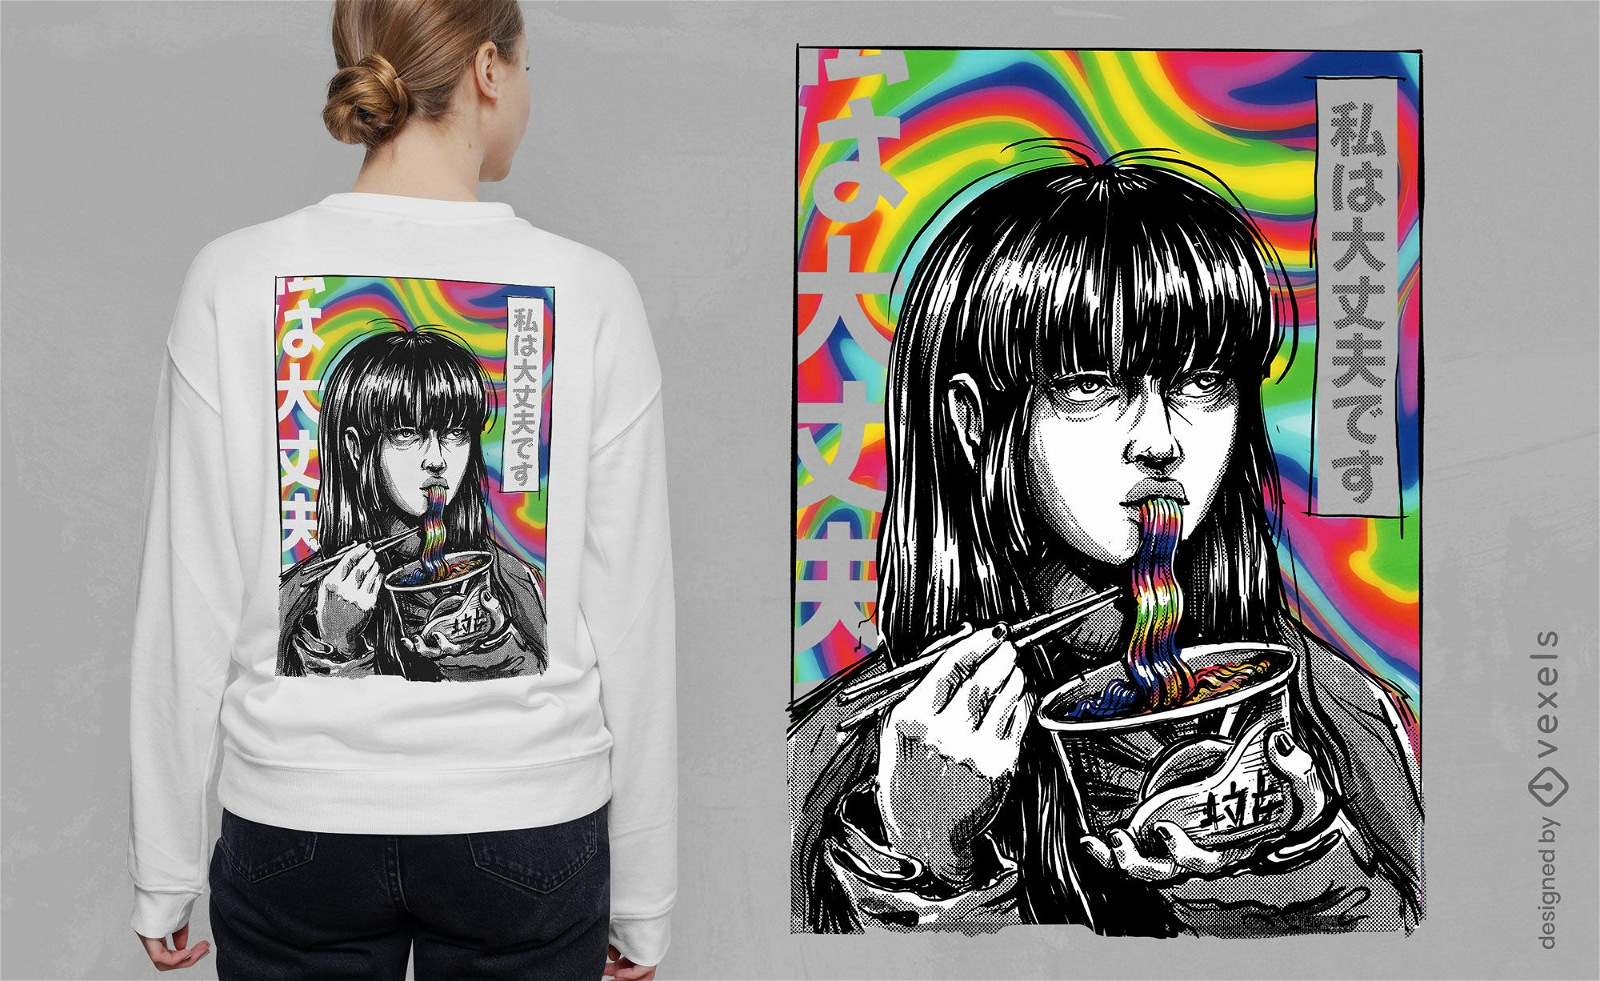 Diseño de camiseta psicodélica de niña japonesa.